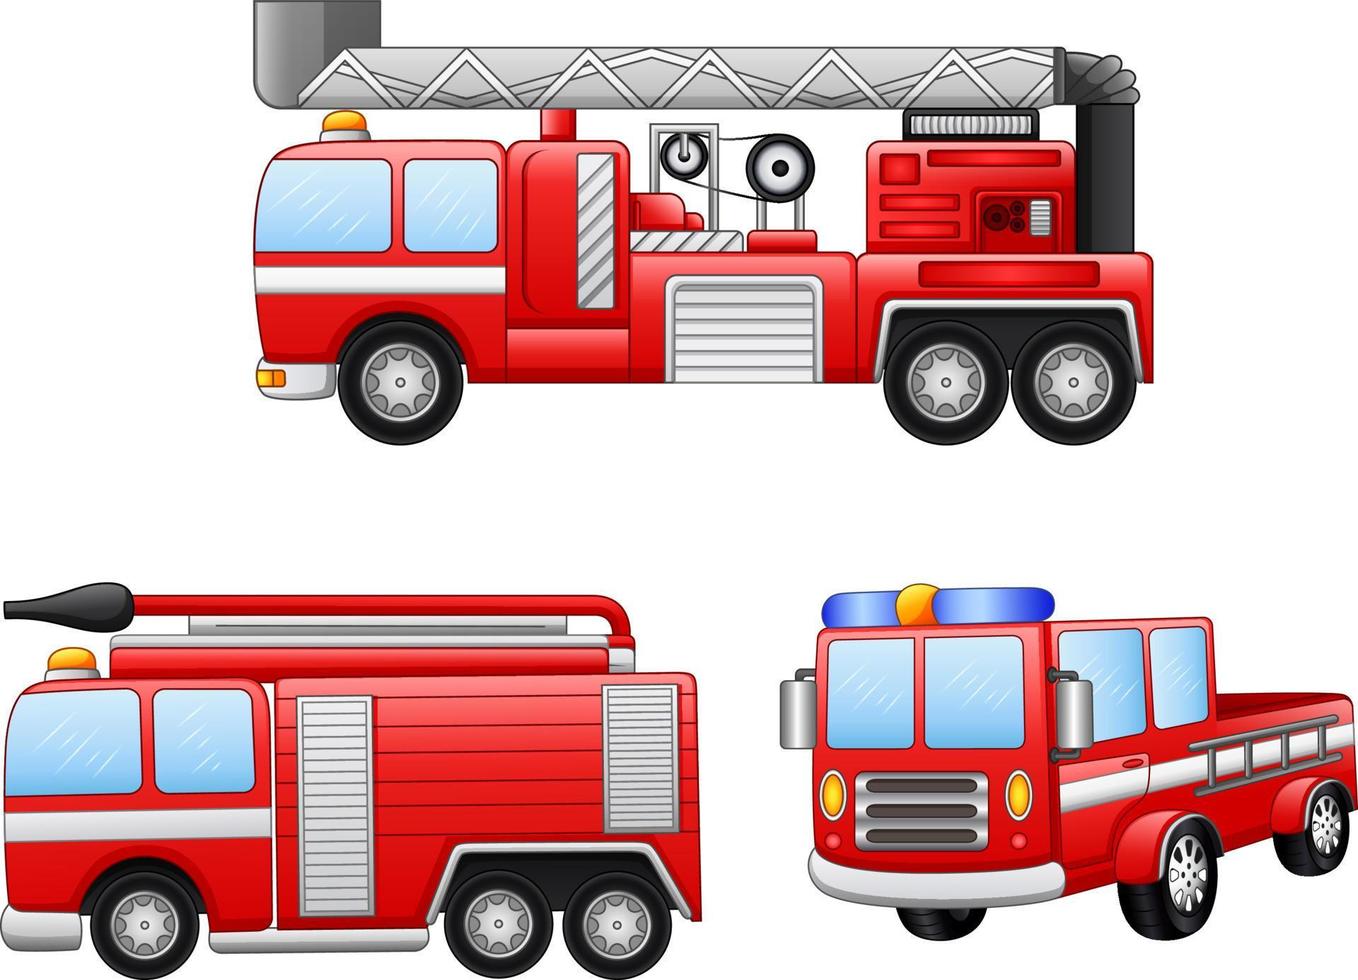 A Fire truck cartoon illustration vector